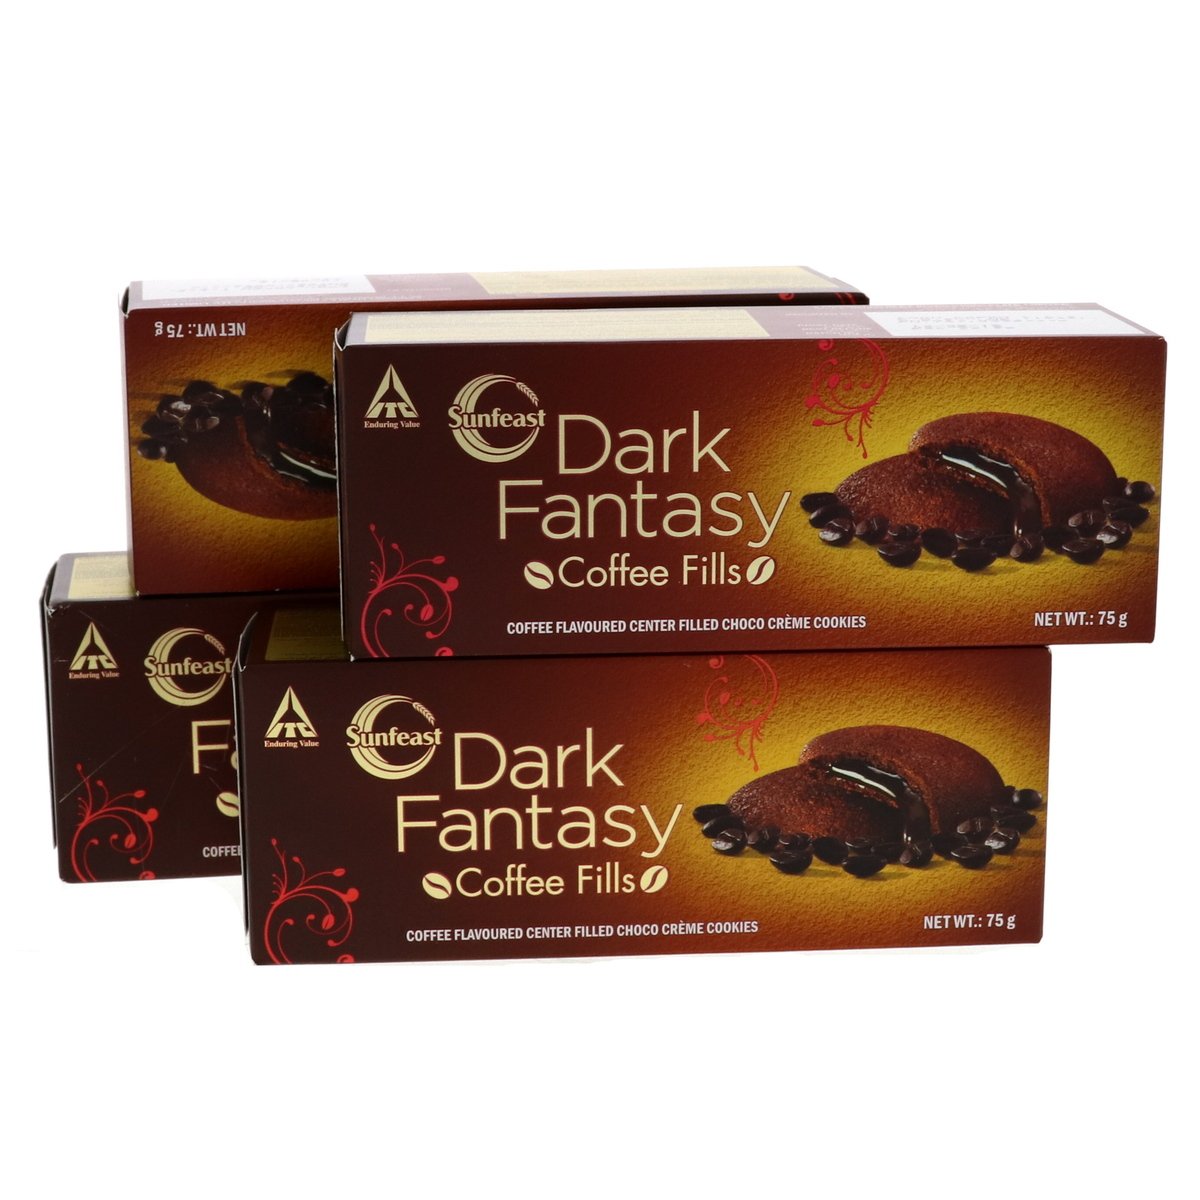 Sunfeast Dark Fantasy Coffee Fills 4 x 75 g